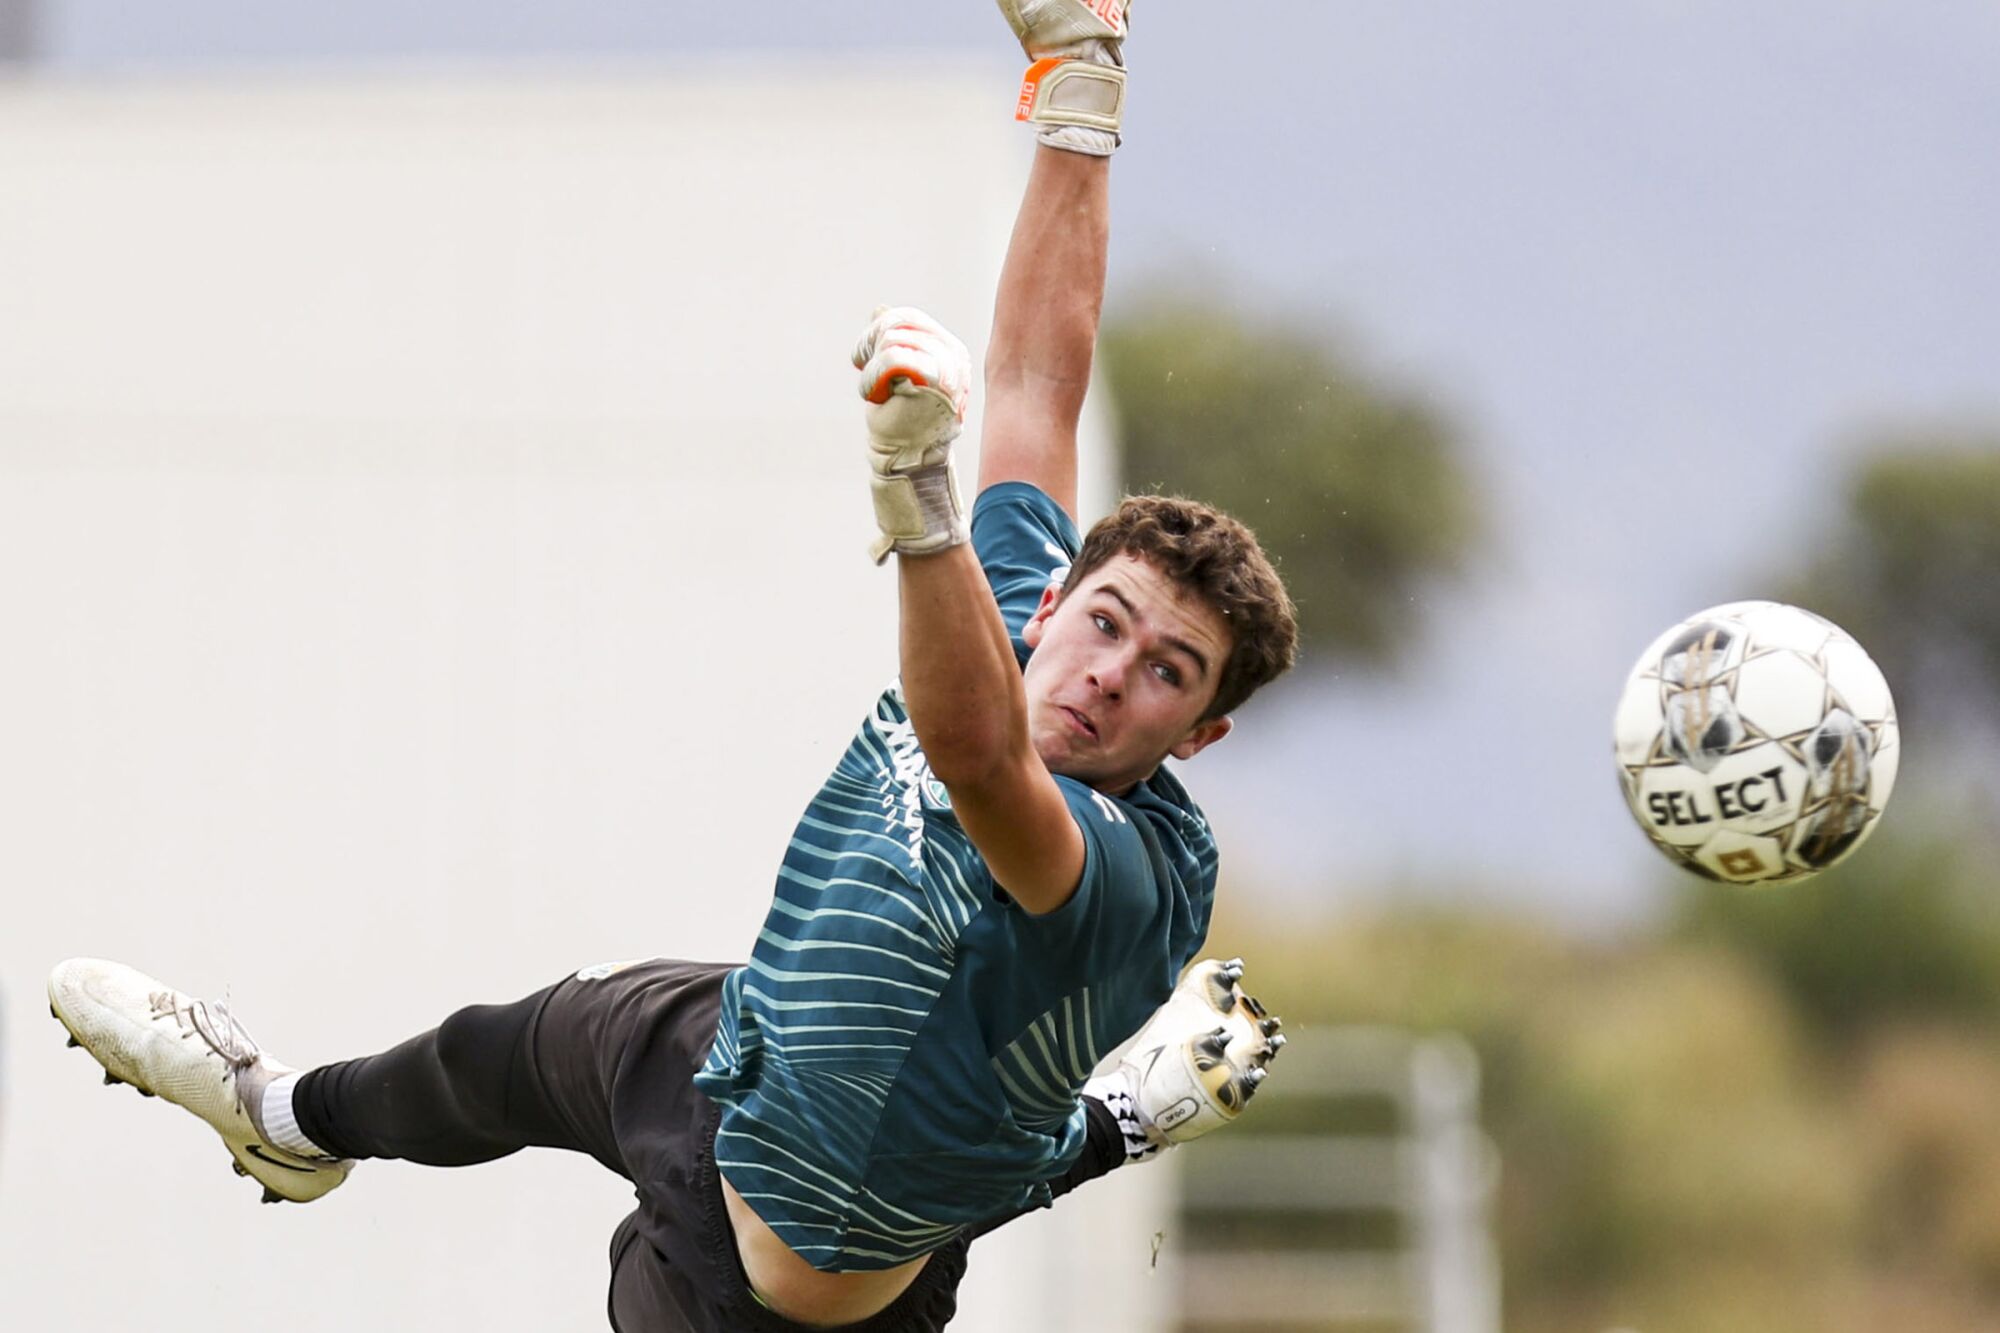 San Diego Loyal goalkeeper Duran Ferree, 15, works through drills during practice at the Chula Vista Elite Training Center.